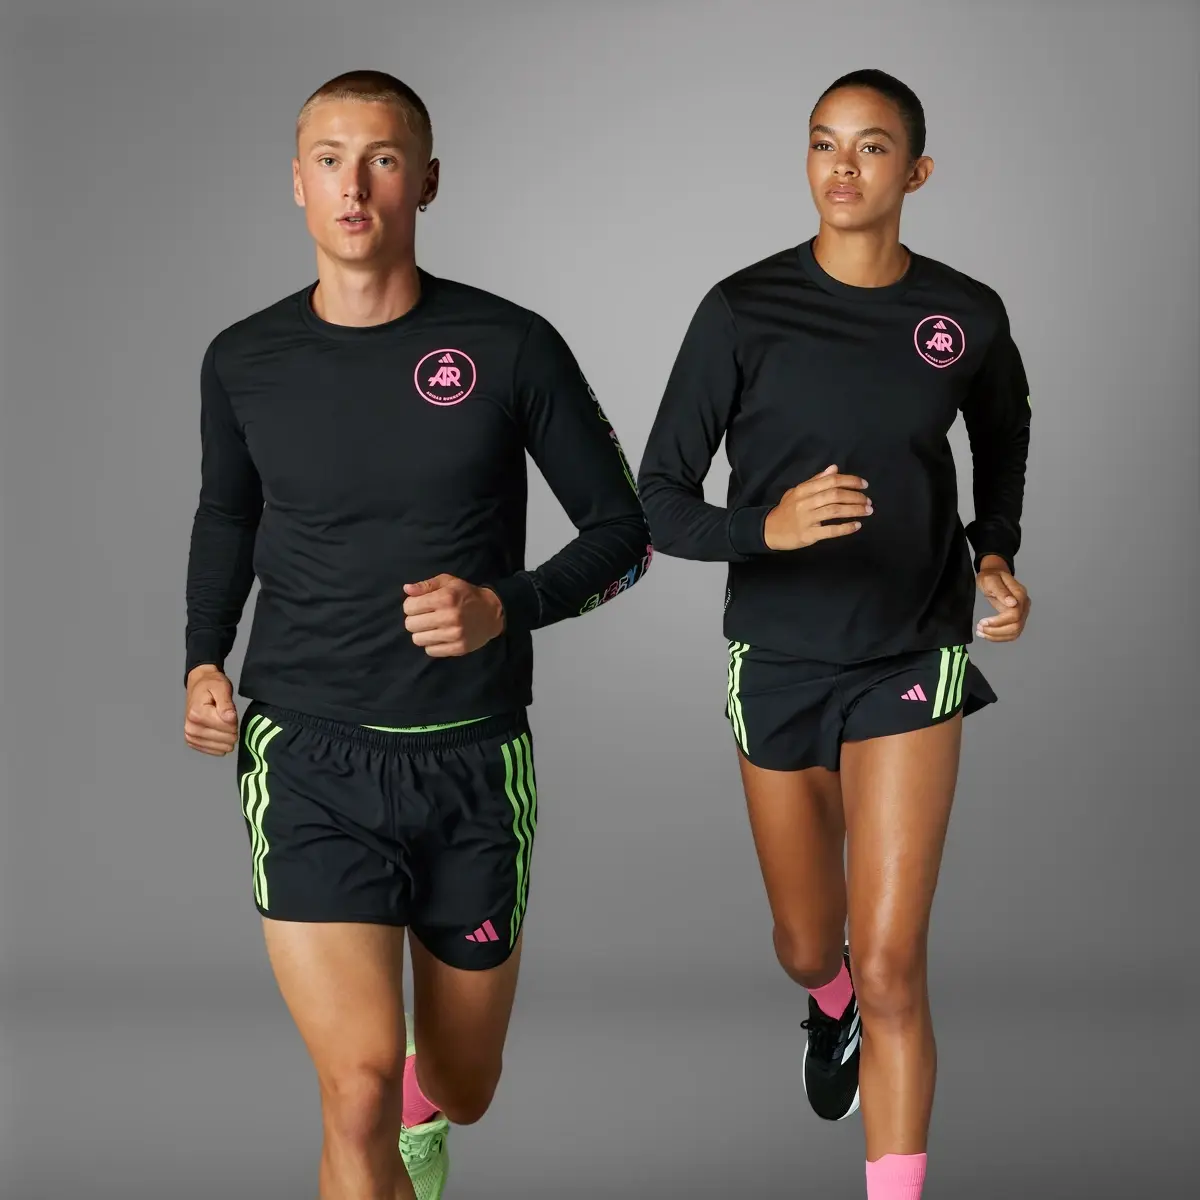 Adidas Own the Run adidas Runners Long Sleeve Long-Sleeve Top (Gender Neutral). 1